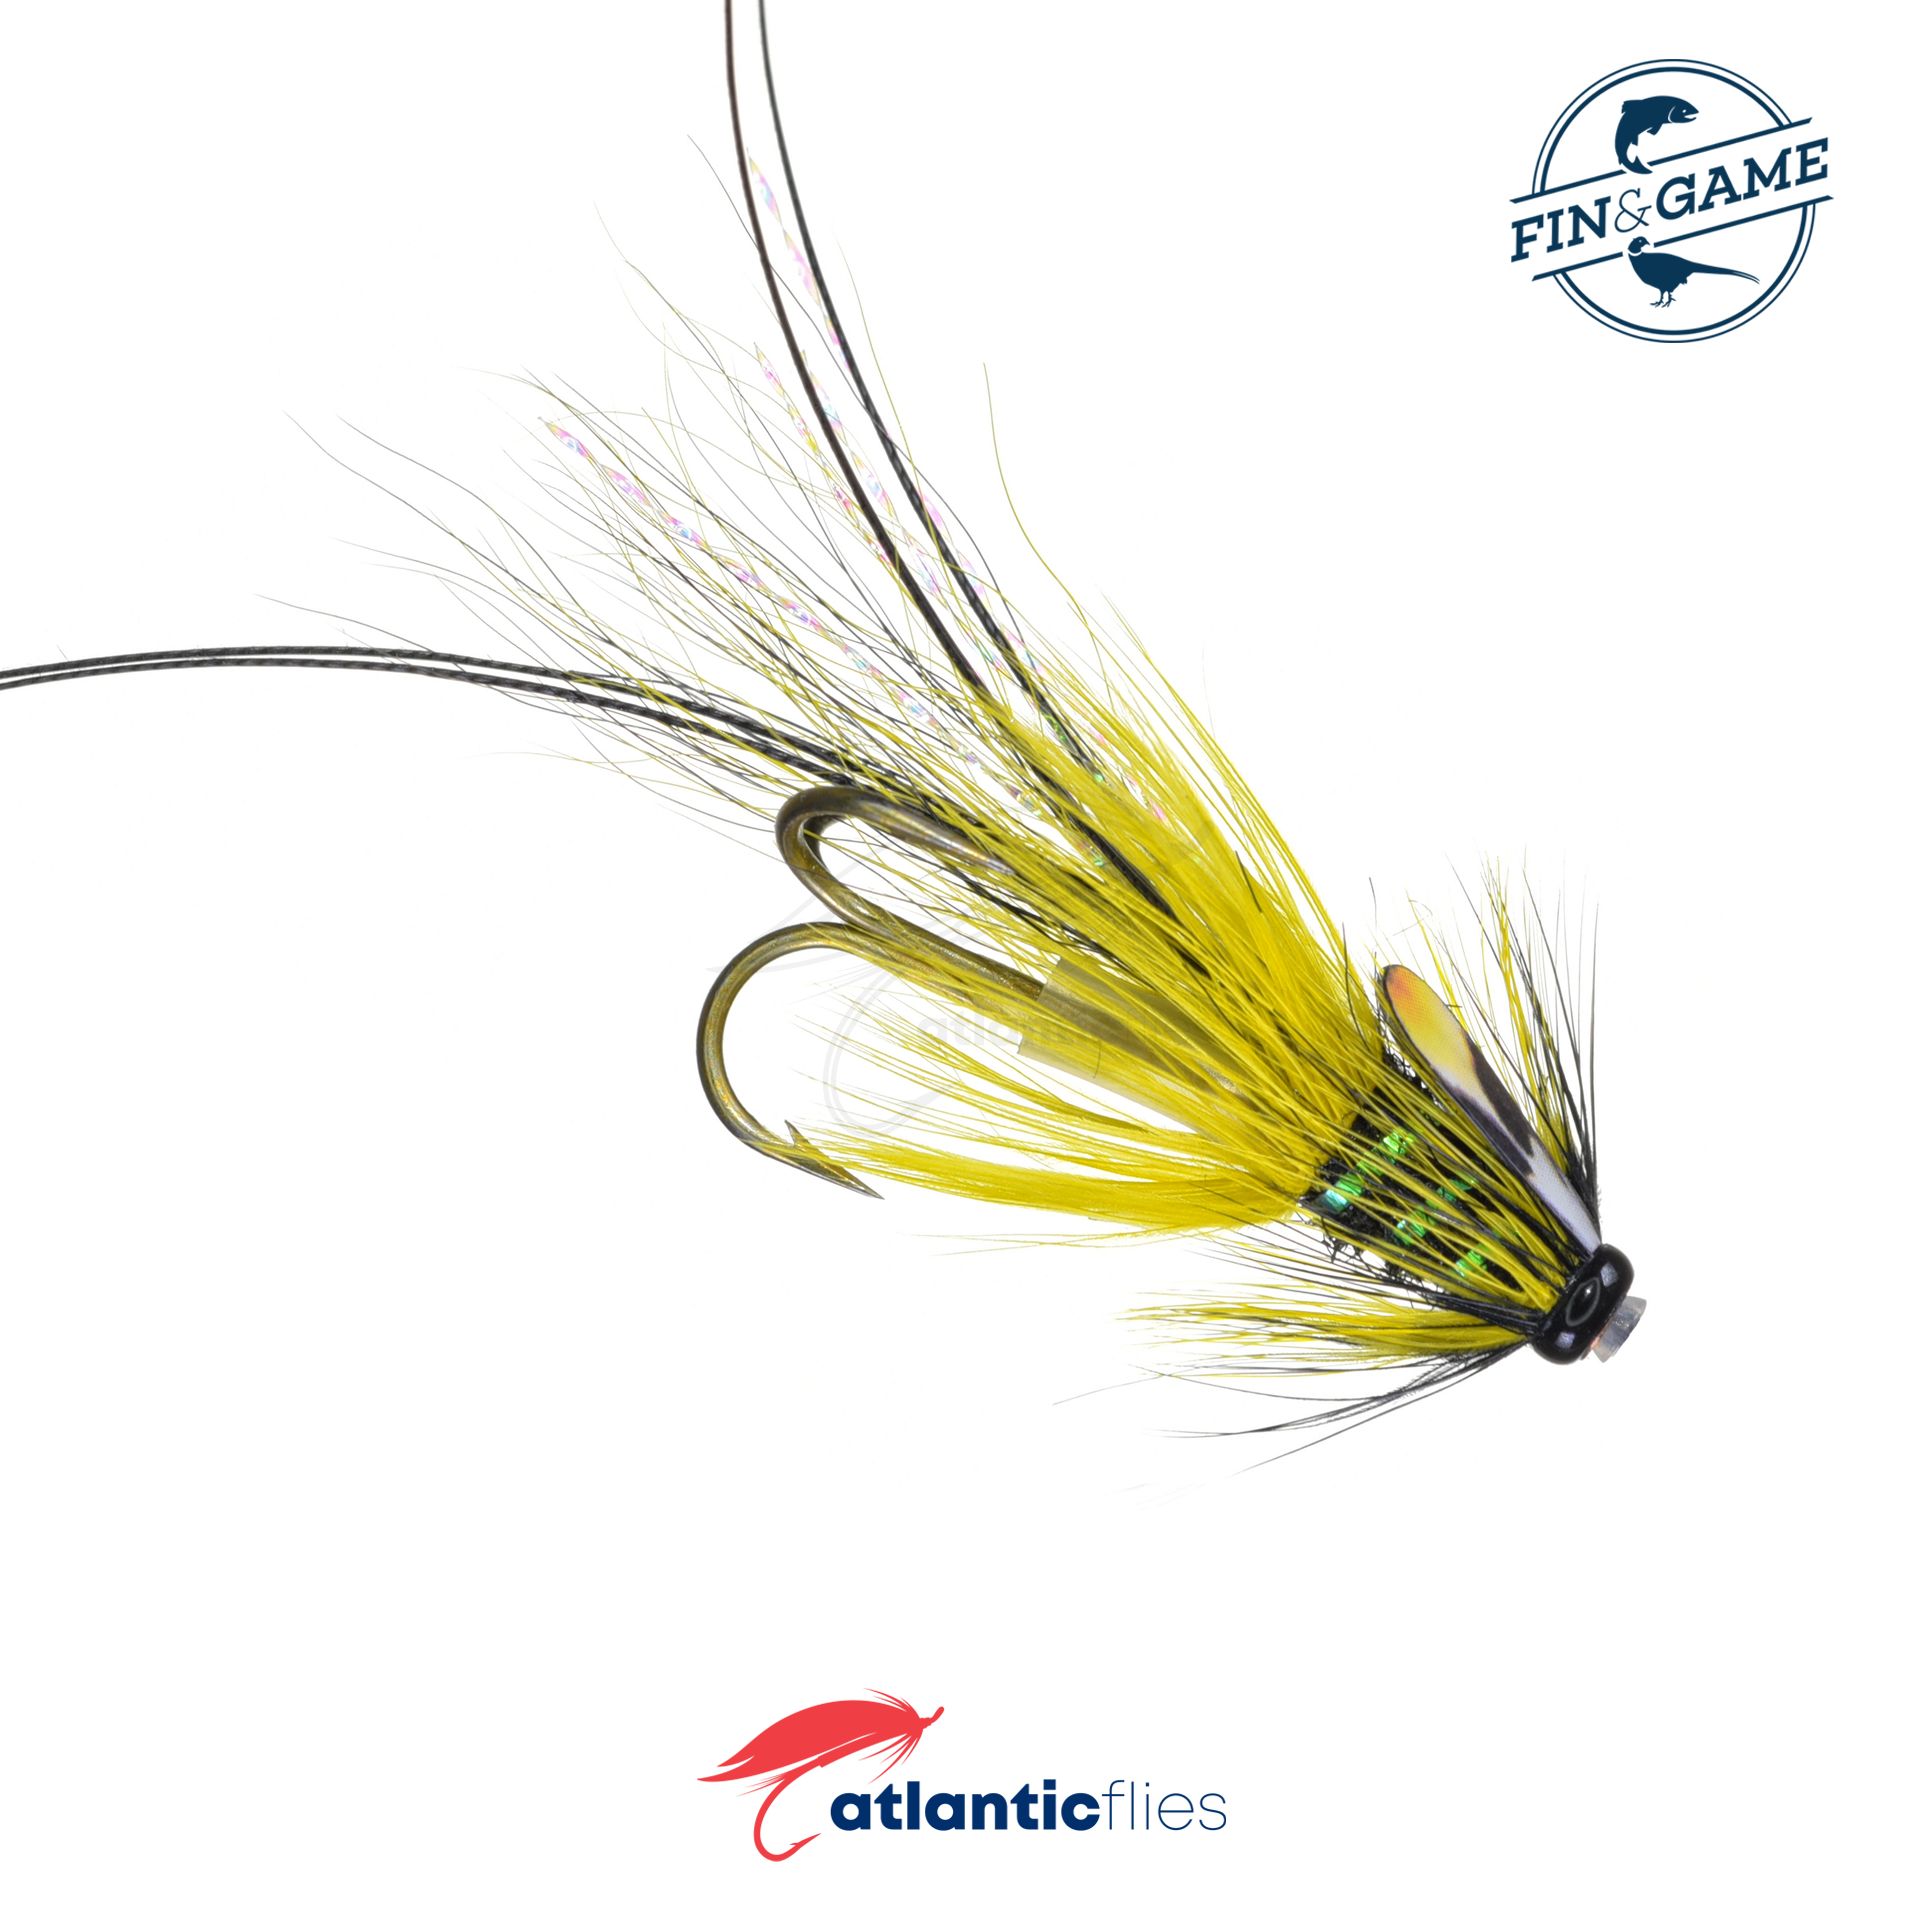 Atlantic Flies Black and Yellow PBP Tube - Fin & Game